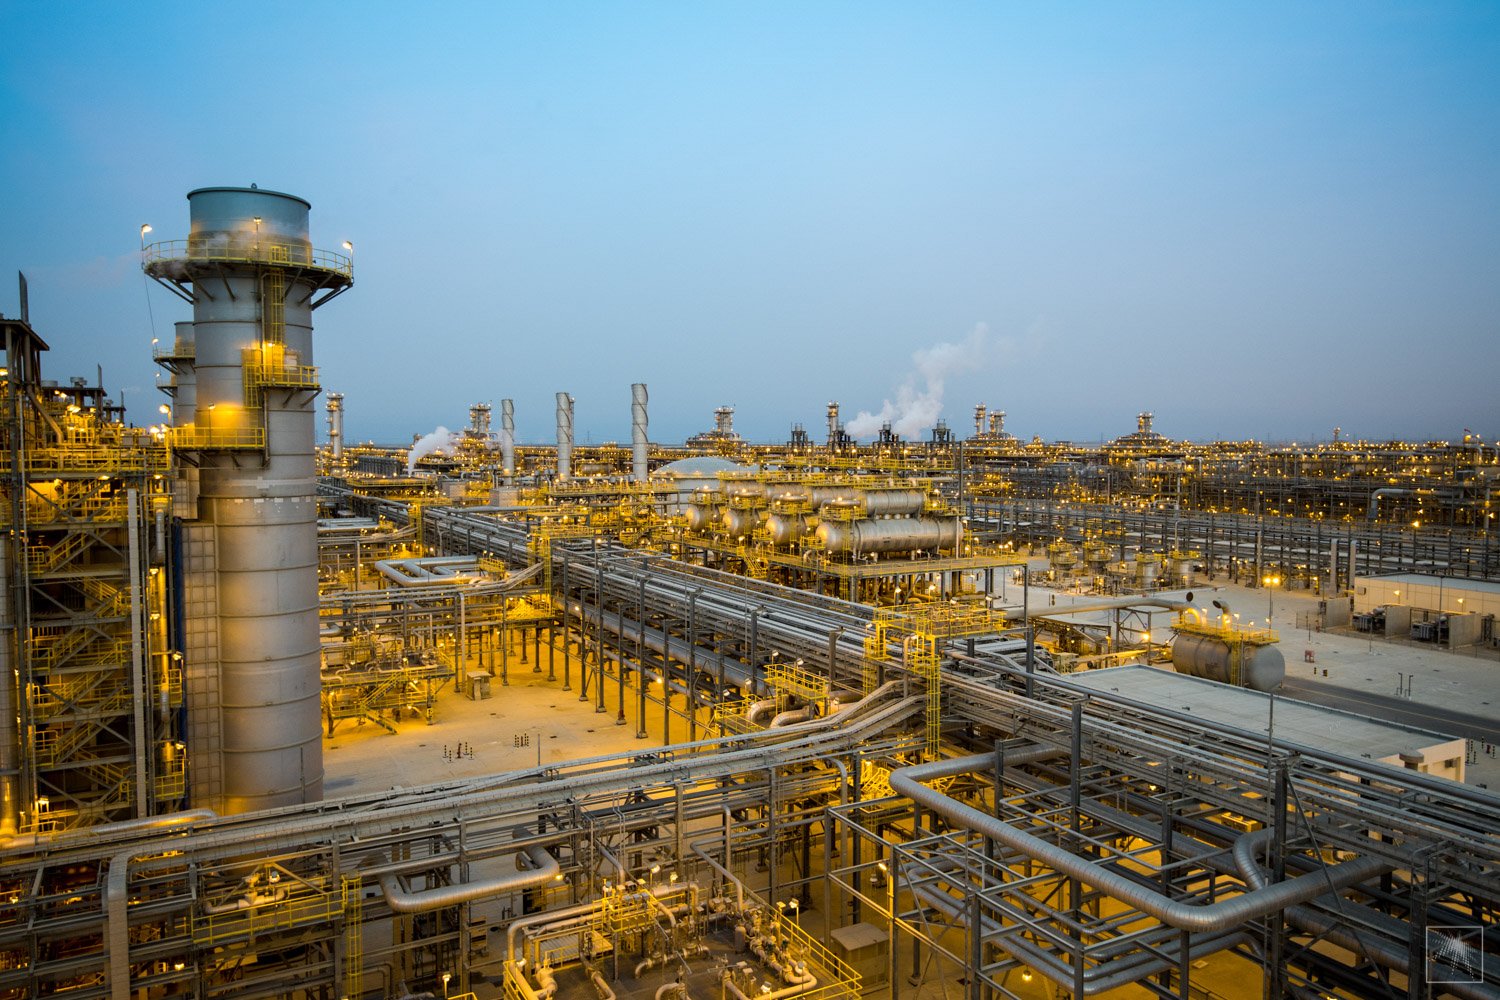 Al-Fadhili plant is one of Saudi Aramco's biggest projects